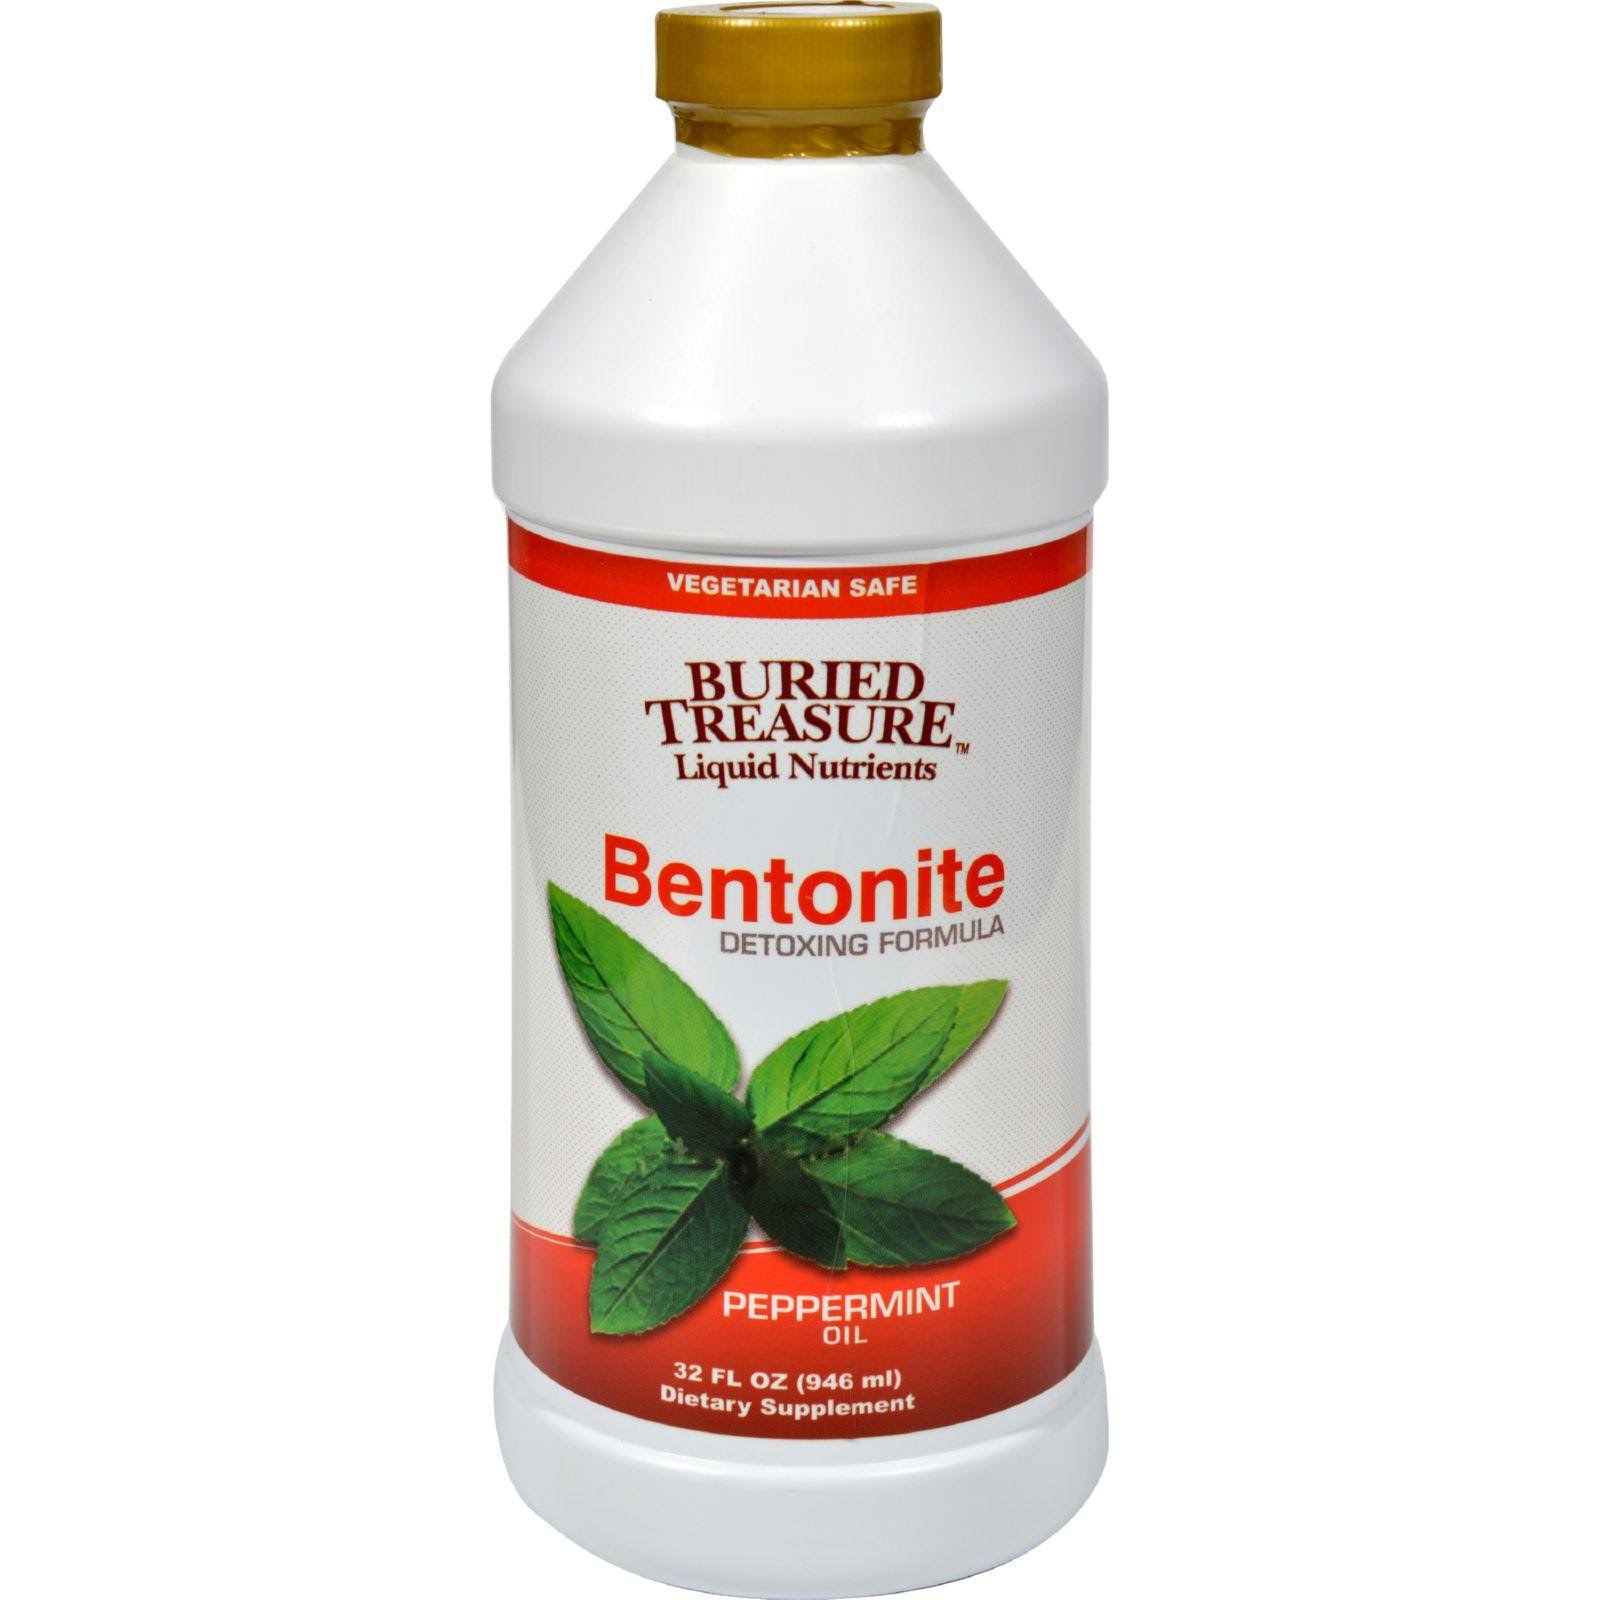 Buried Treasure Bentonite Detoxing Supplement Formula - Peppermint Oil, 32oz